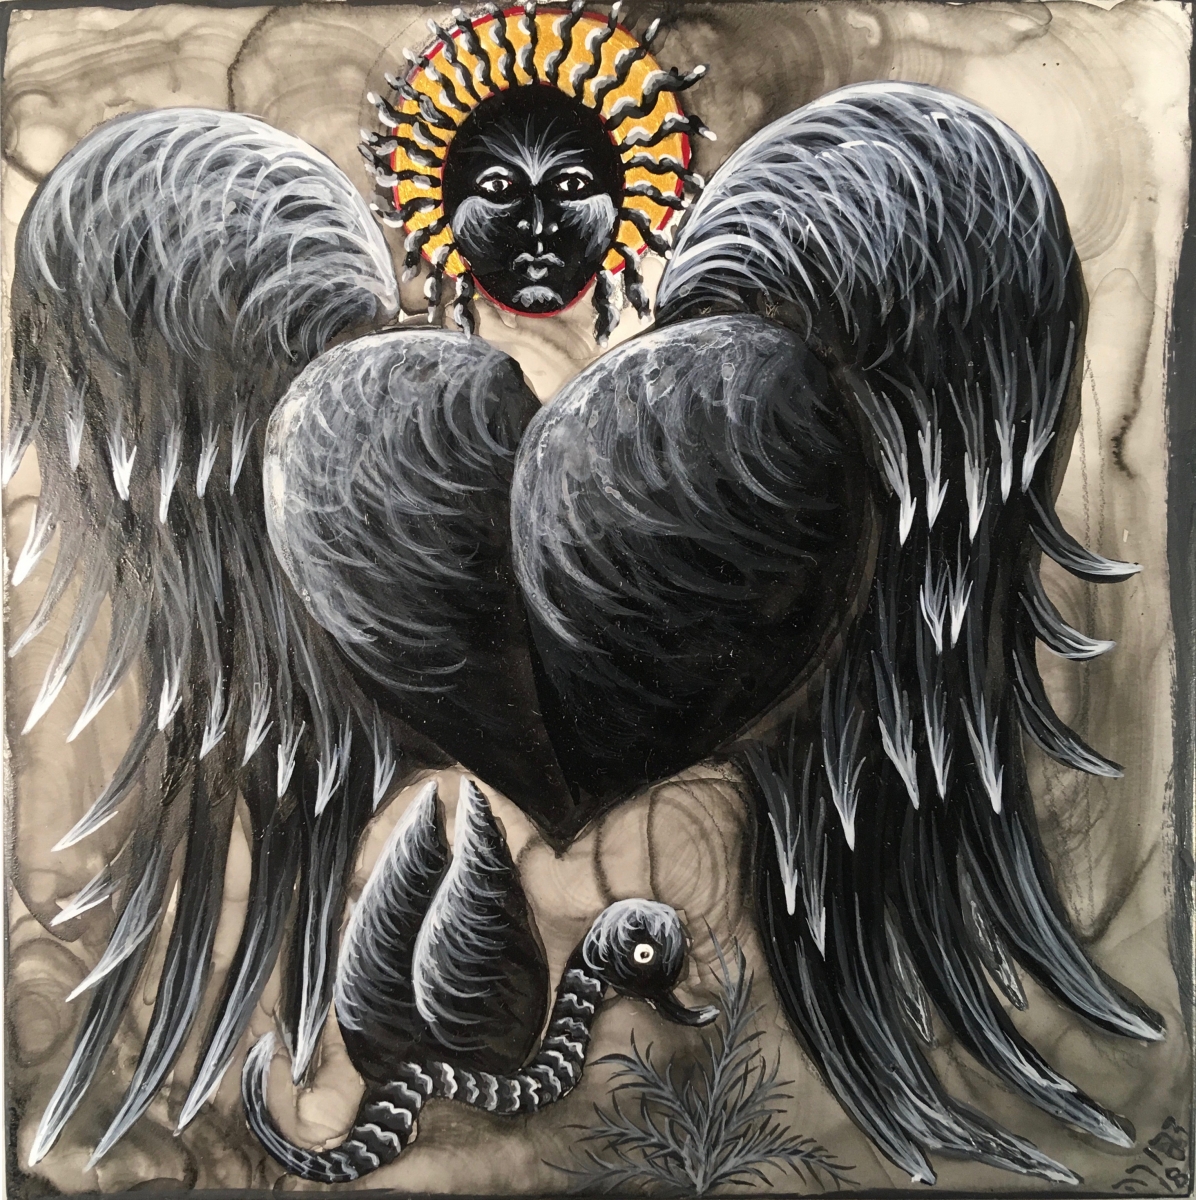 Dark Angel study 2, 6" x 6", 2018, acrylic on board